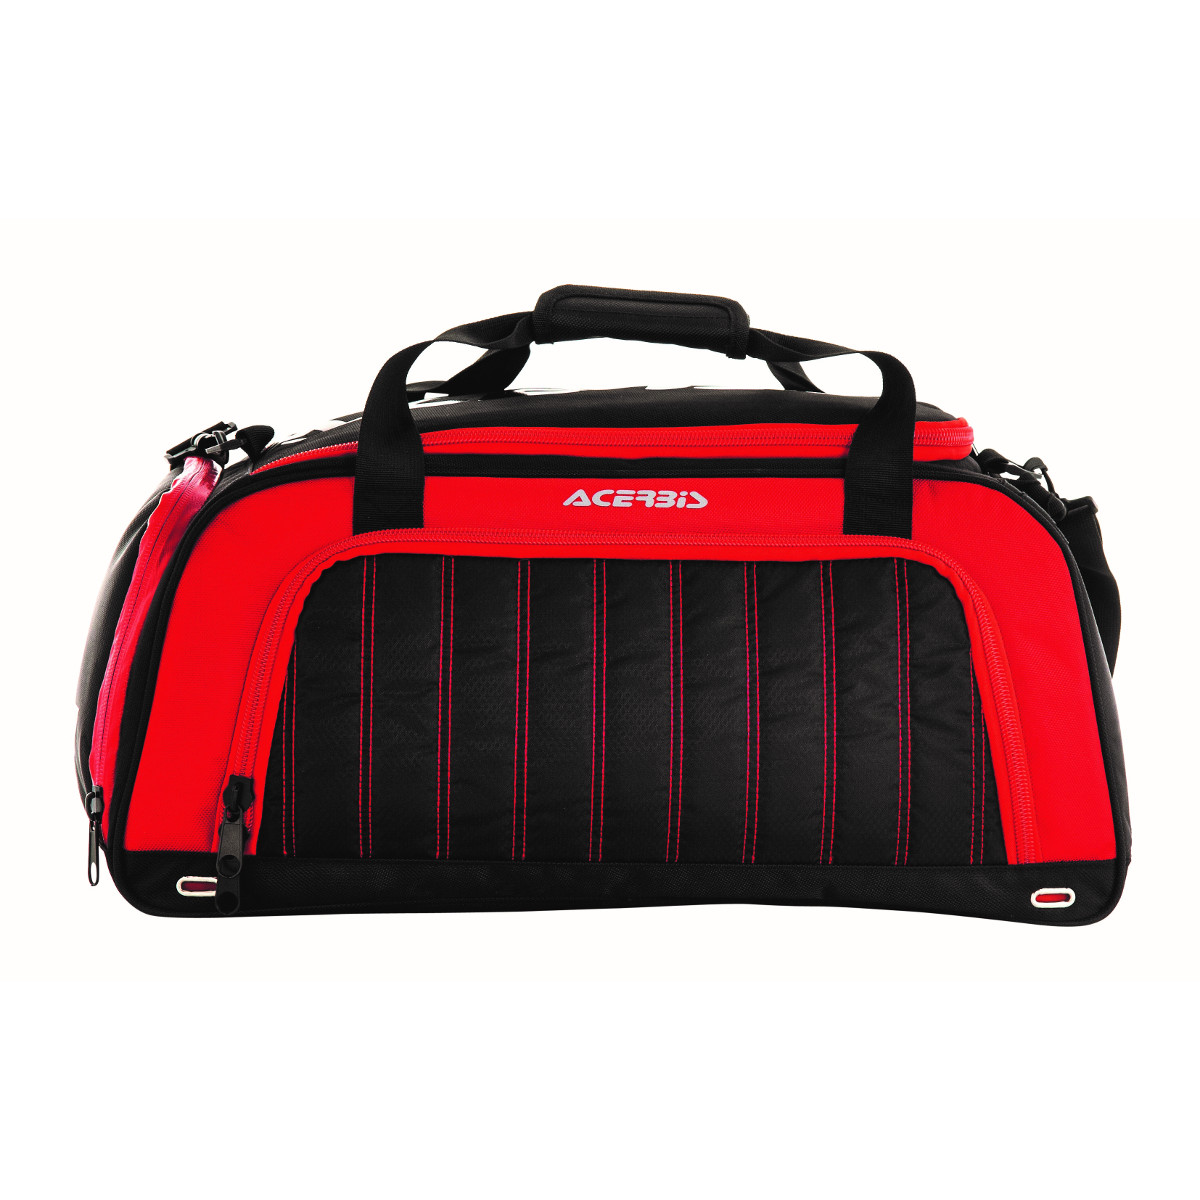 Acerbis Sports and Travel Bag Profile 50 Liter - Red/Black